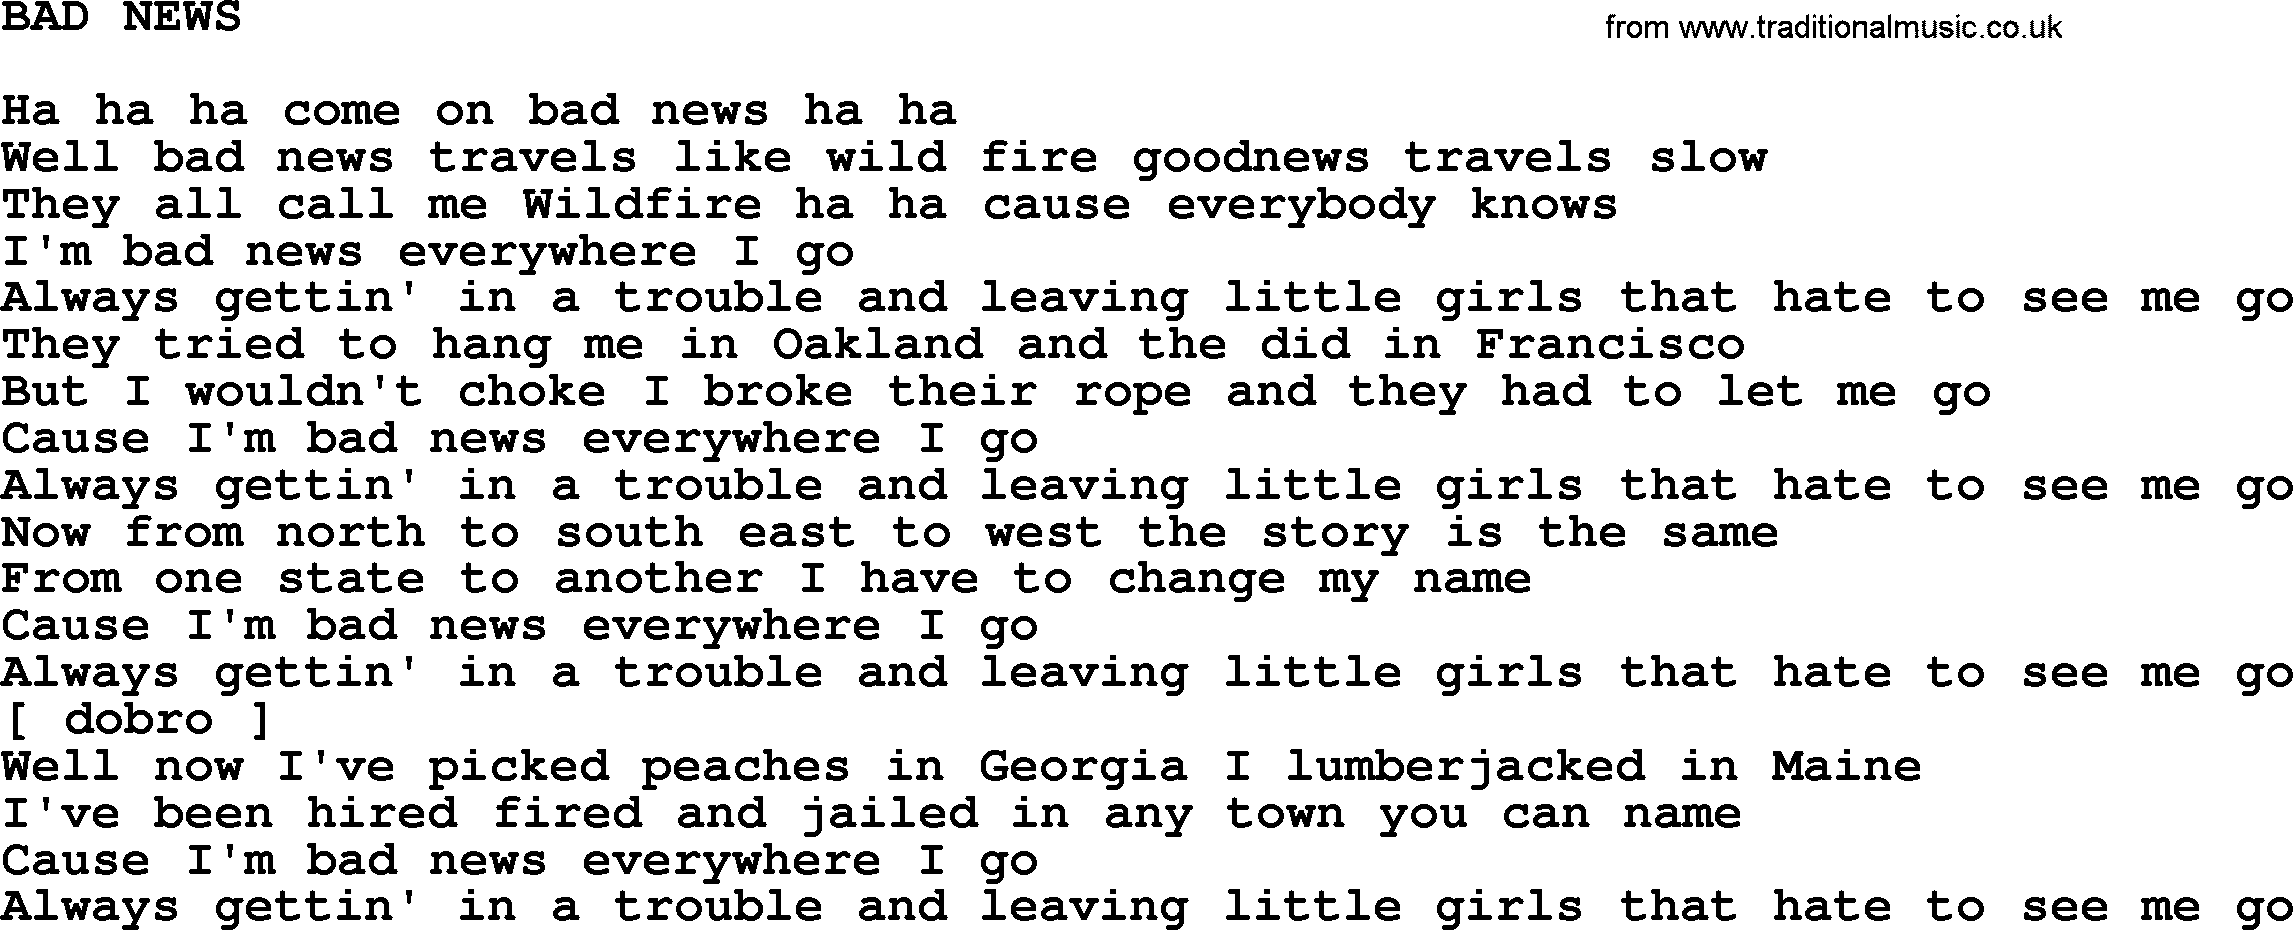 Johnny Cash song Bad News.txt lyrics